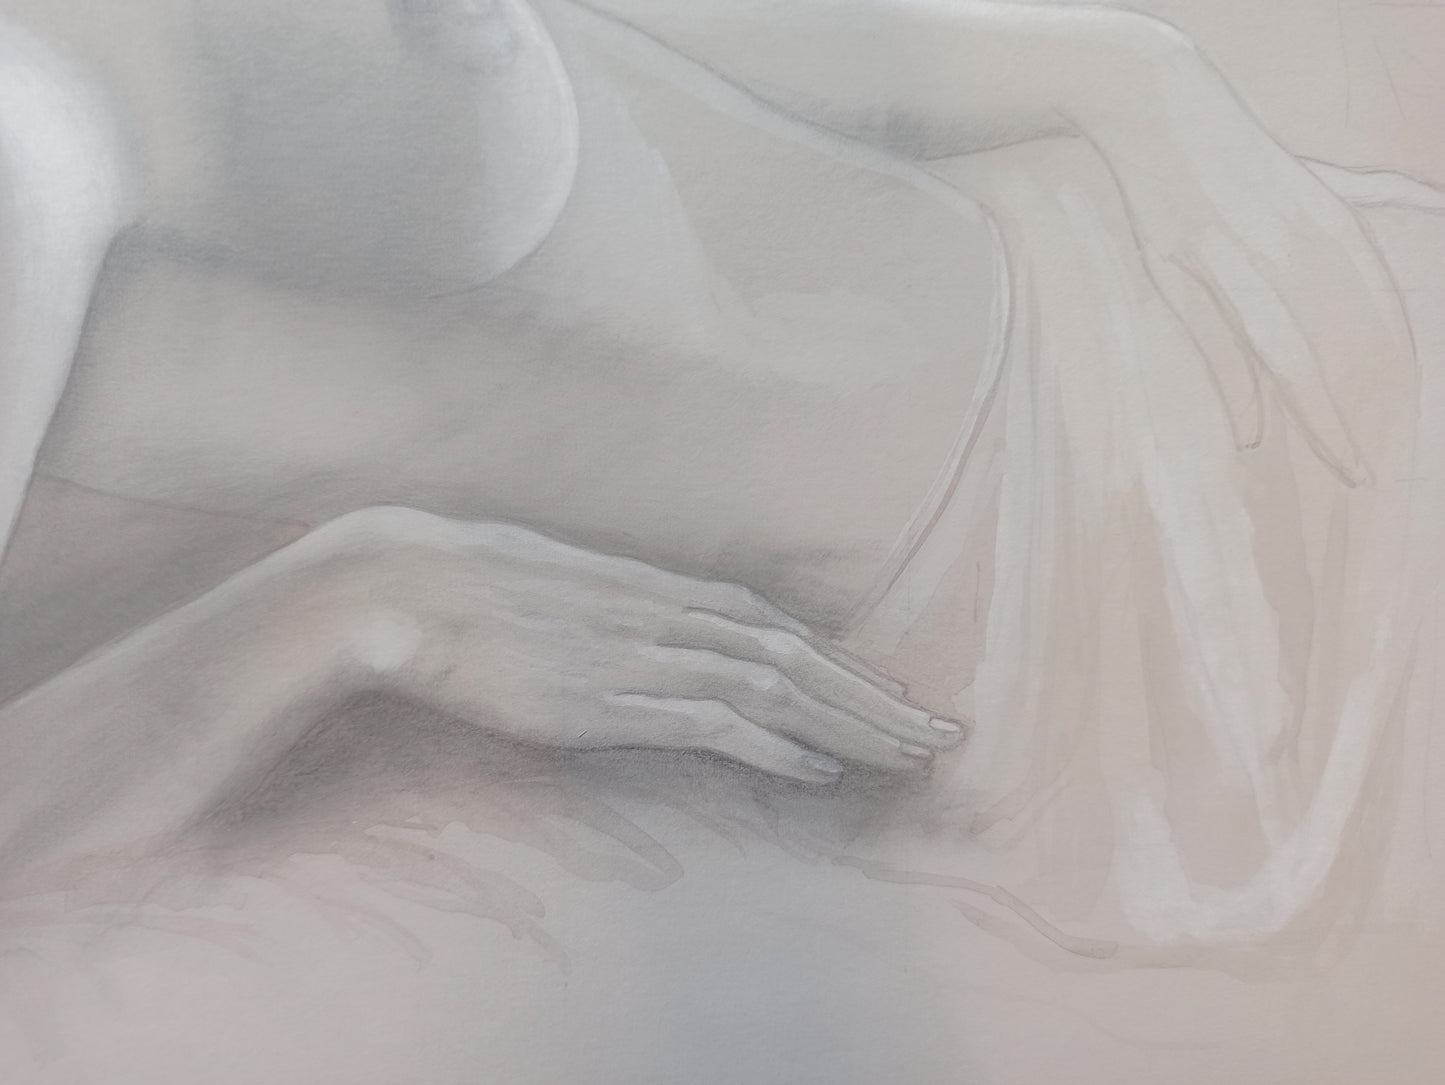 Gregorio Sabillon dibujo desnudo mujer gris detalle mano Gaudifond